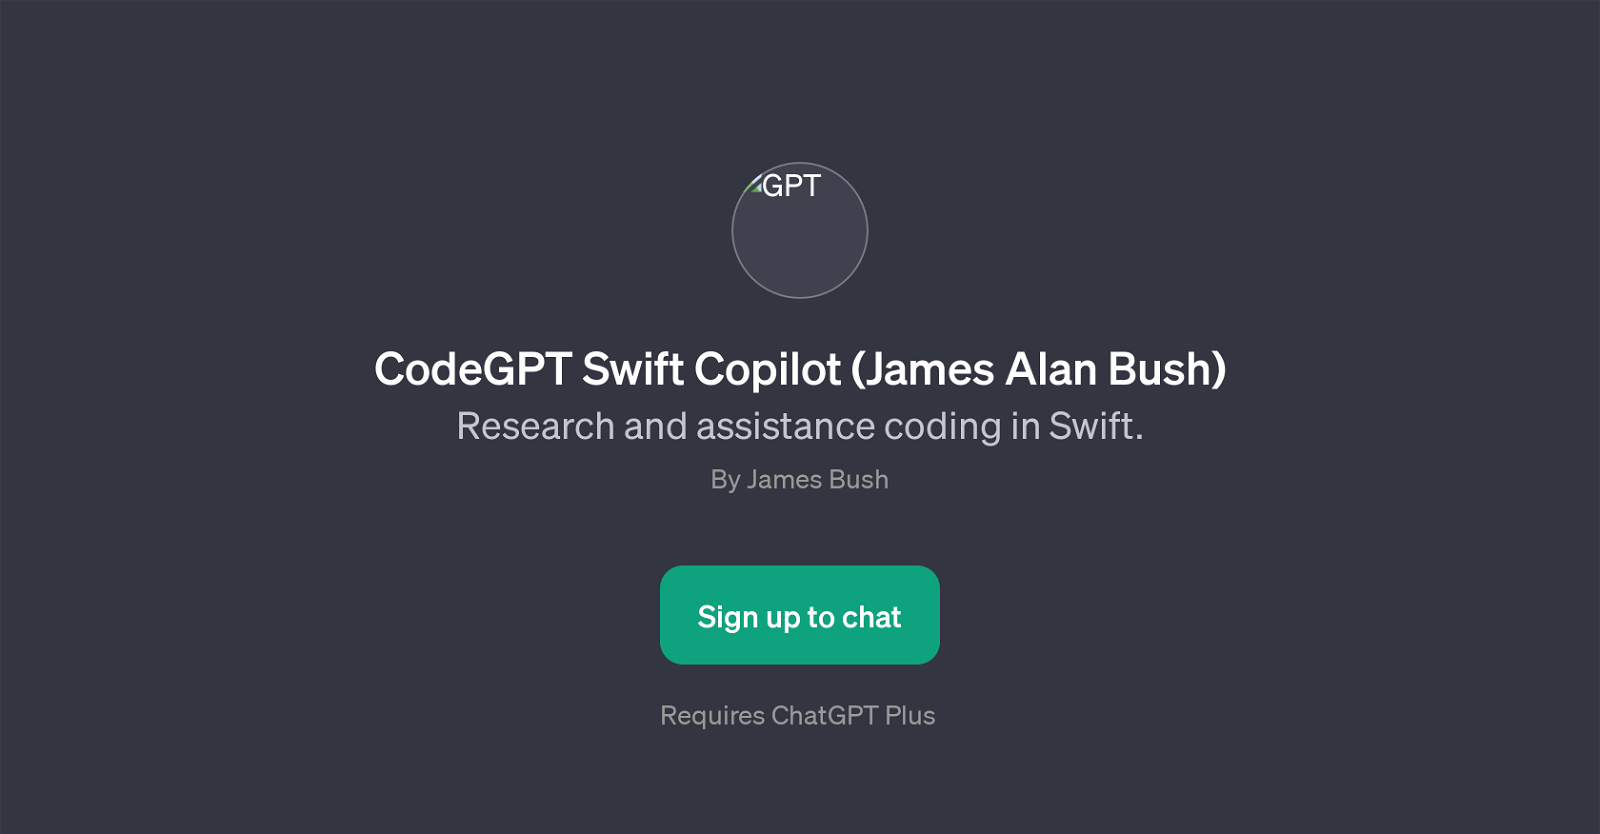 CodeGPT Swift Copilot website